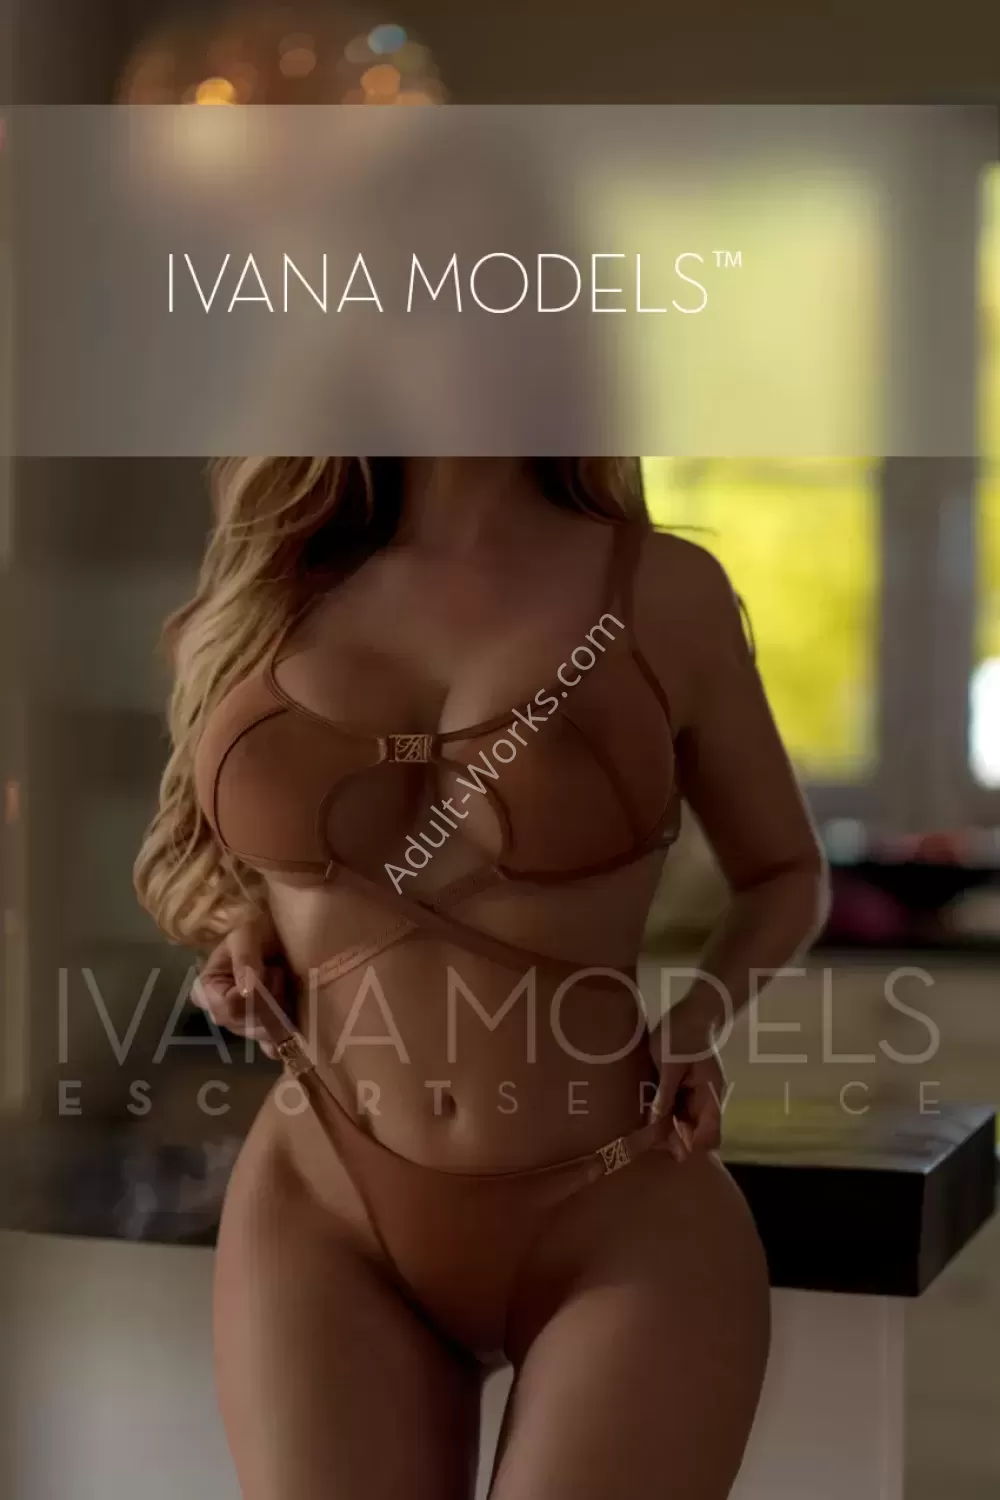 Ivana Models Escort Service, Berlin